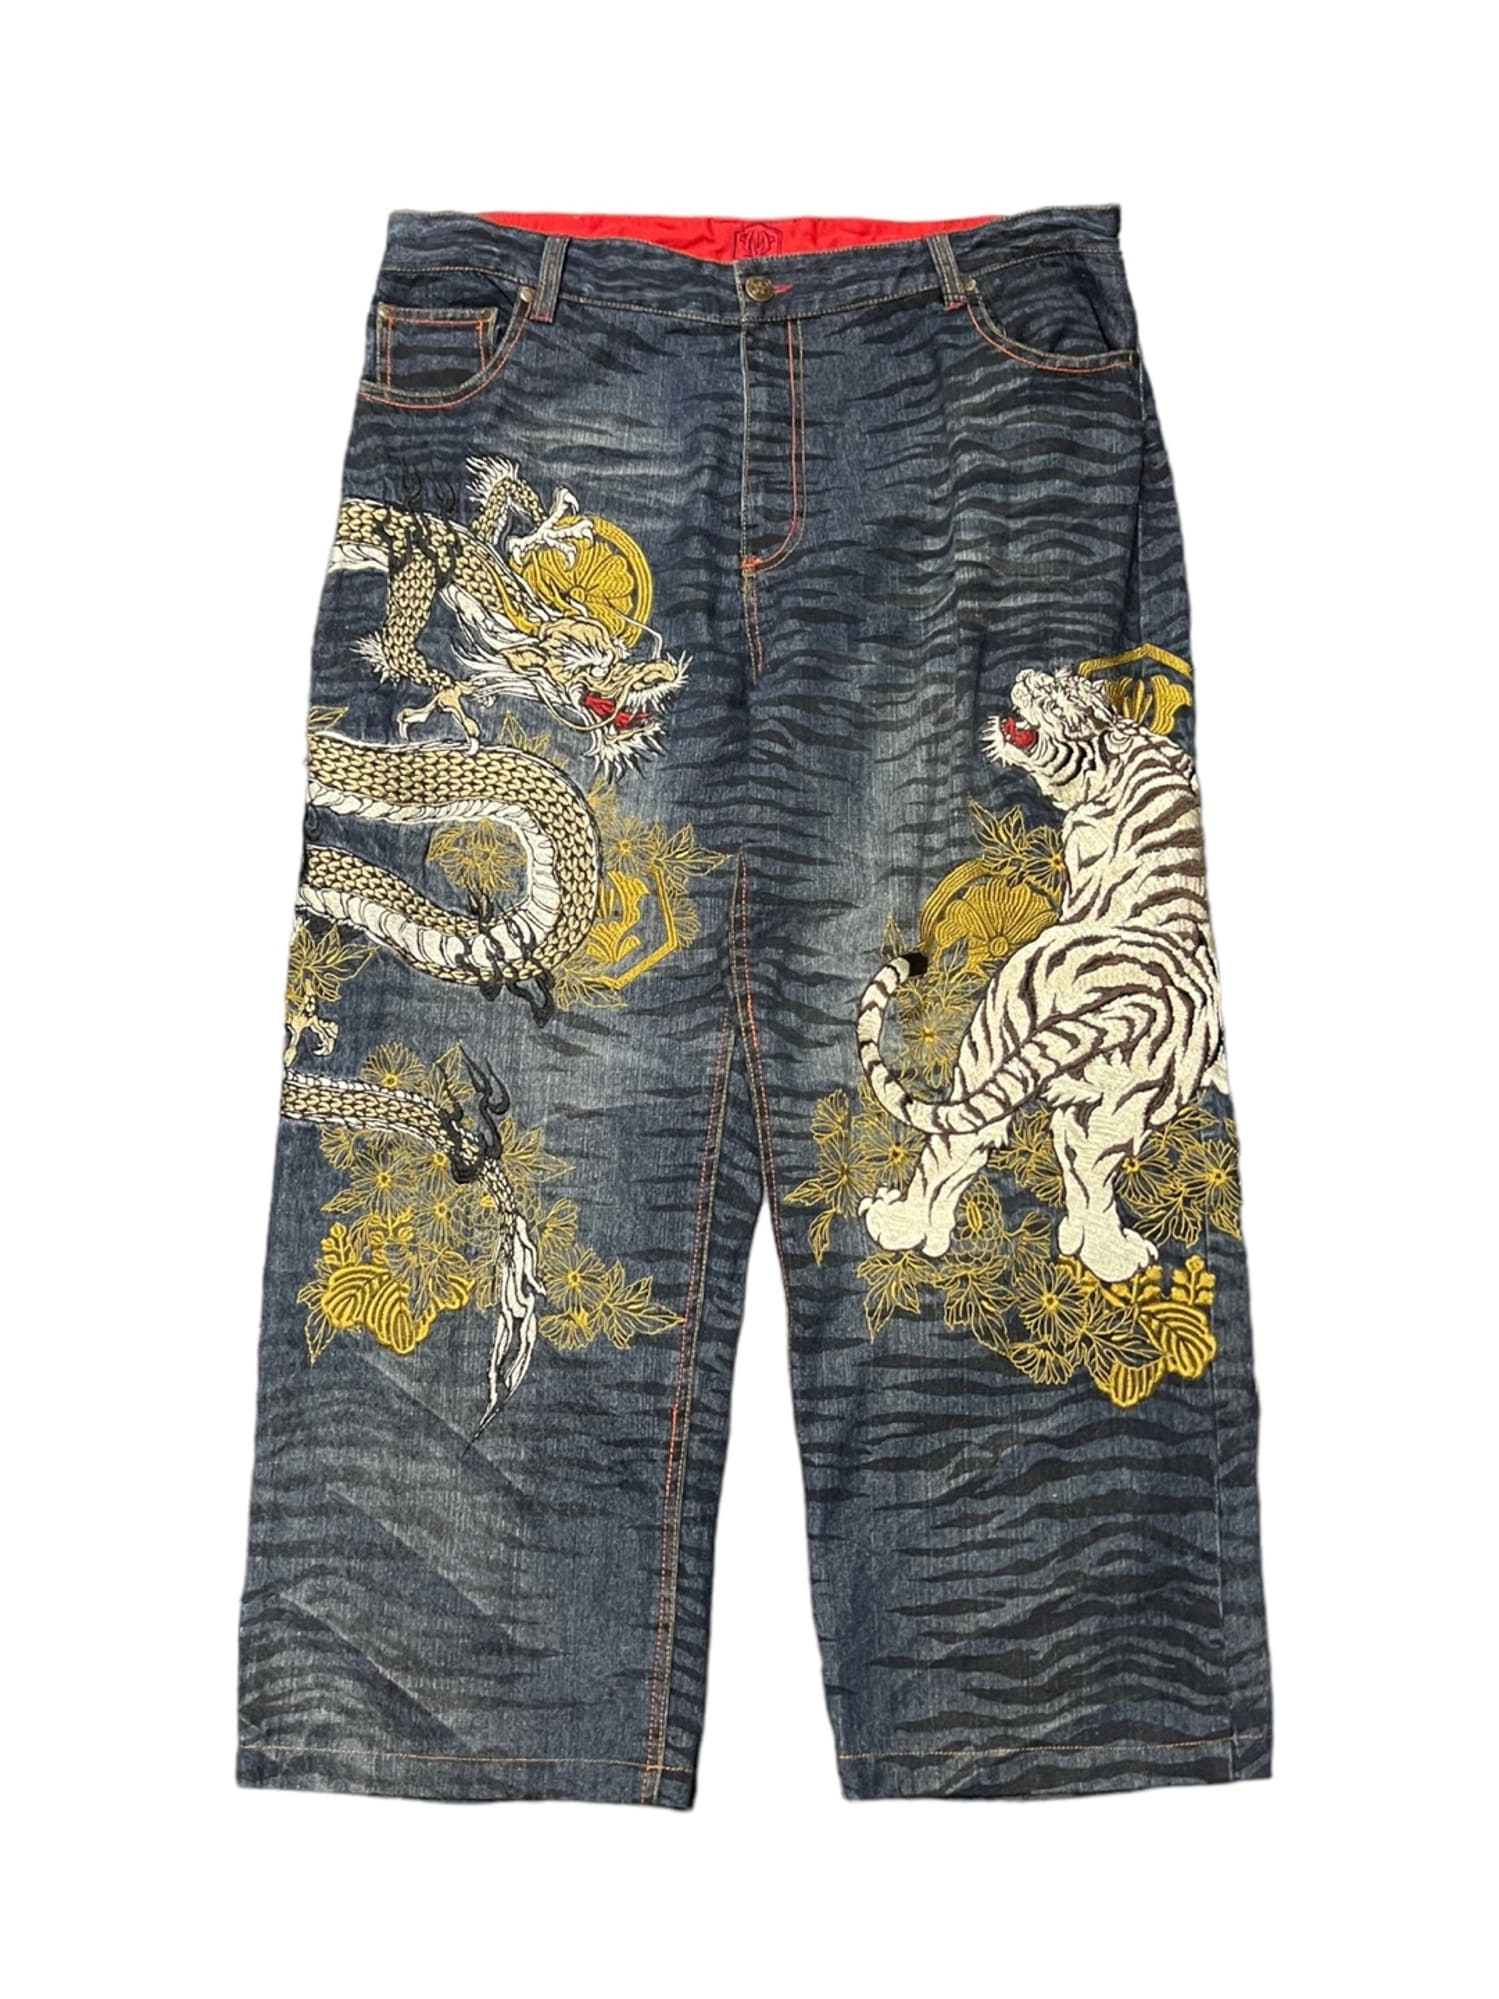 華鳥風月 화조풍월 Oriental Dragon X Tiger  Needle Point Pants